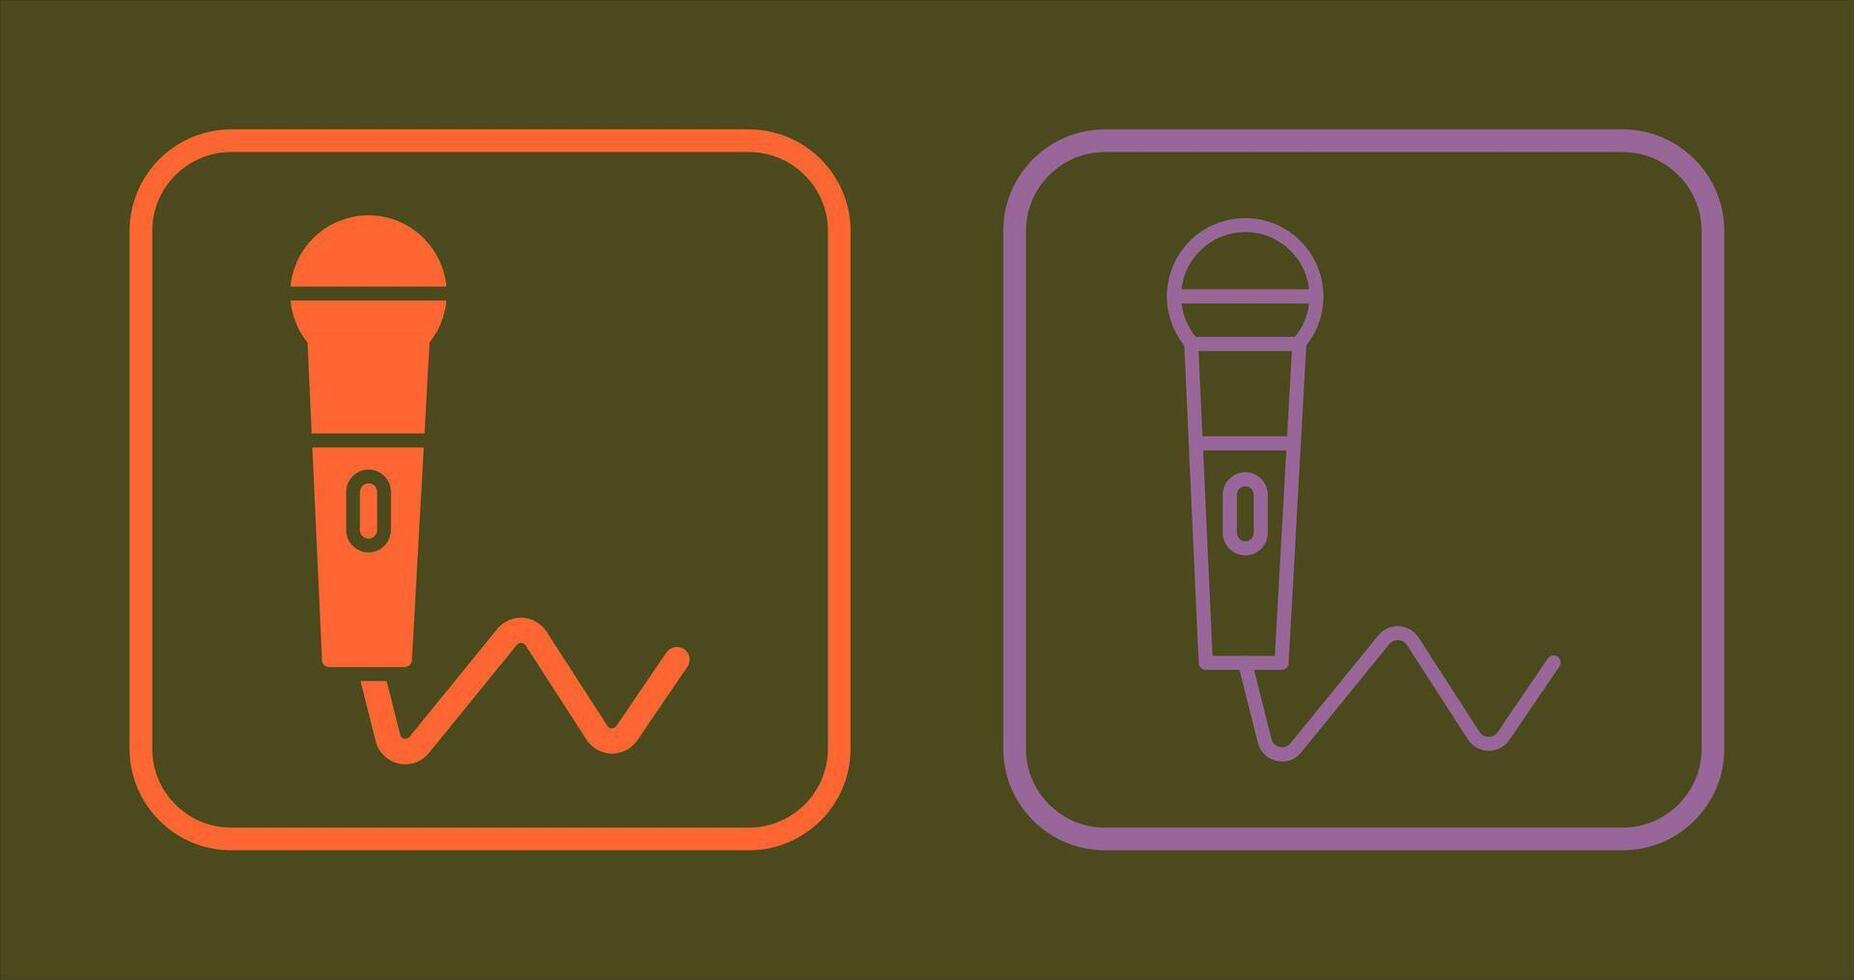 Microphone Icon Design vector